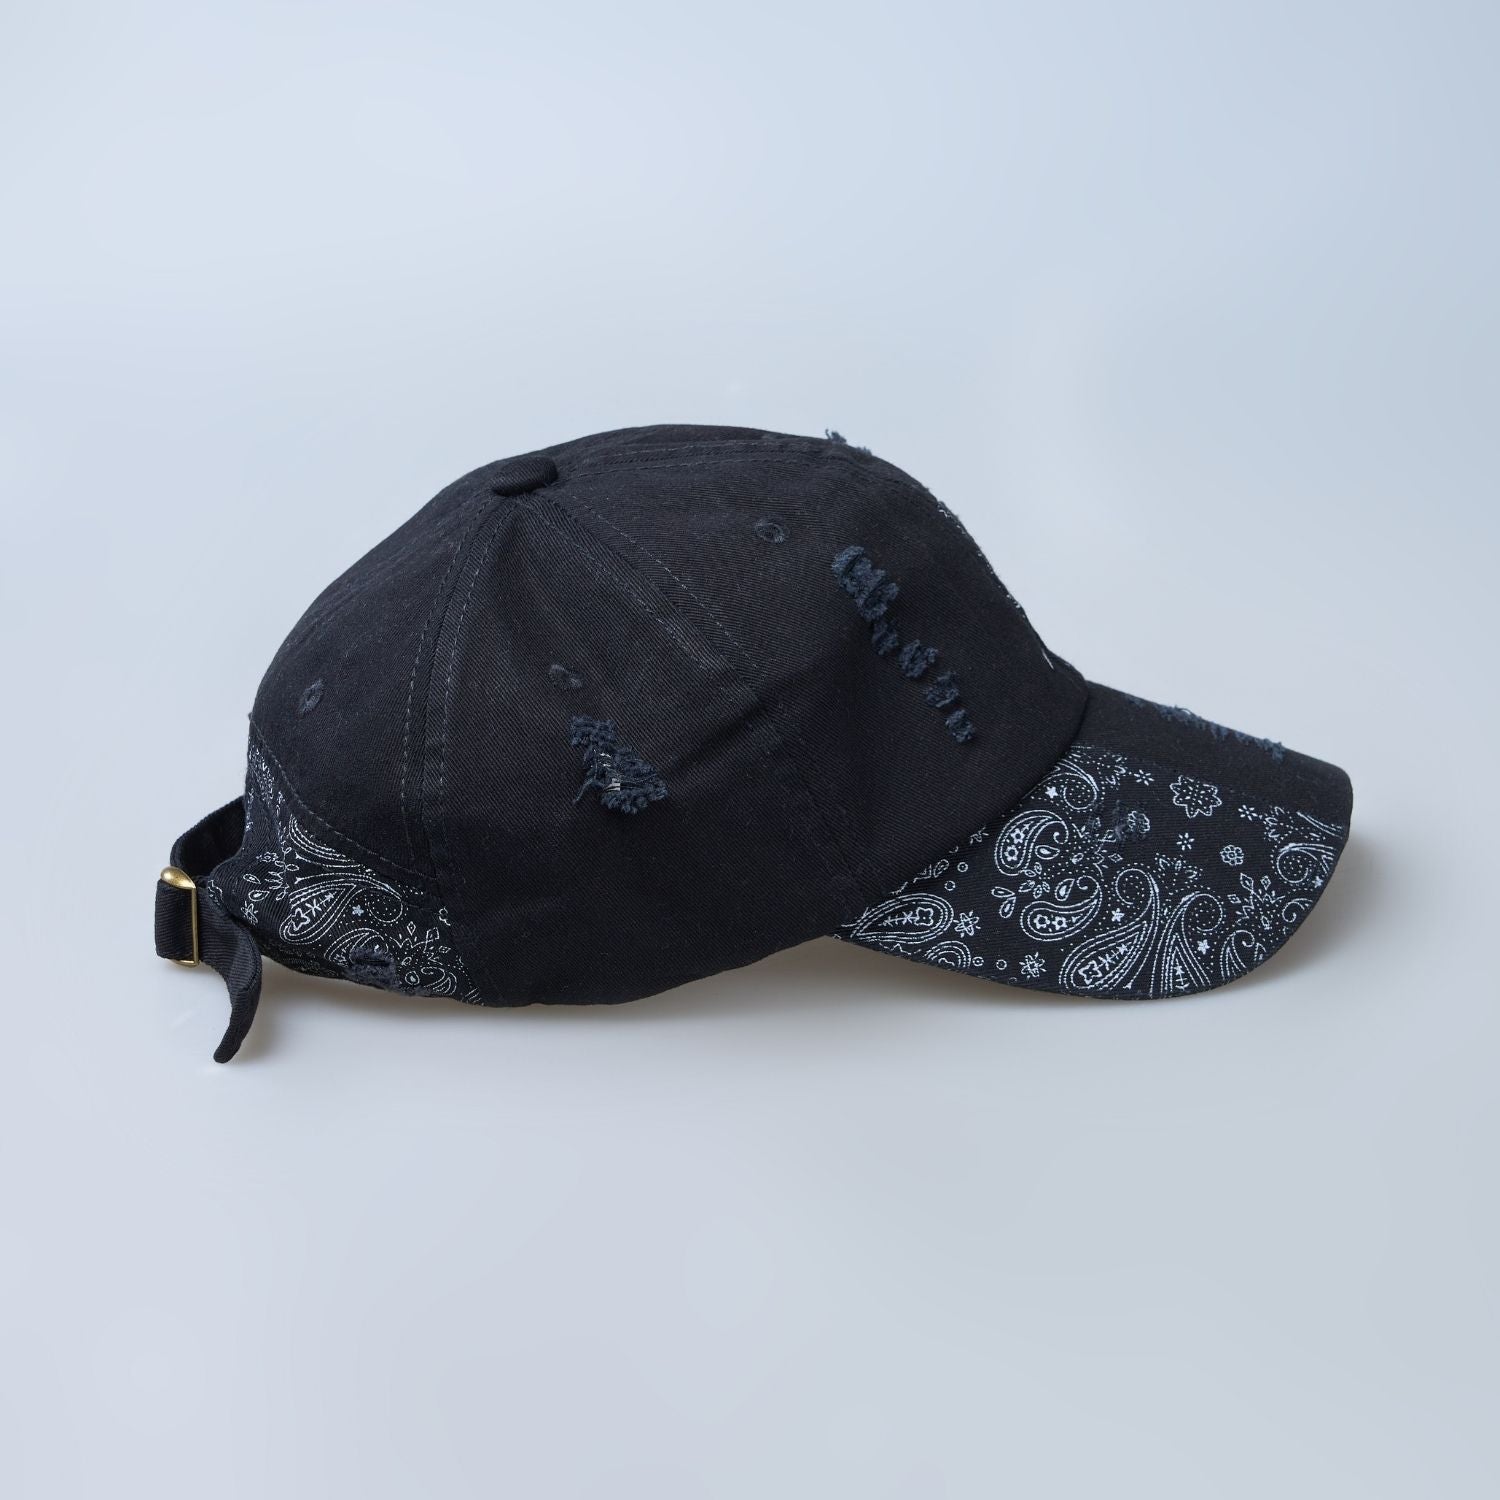 Black colored design patterned cap for men, Side view.